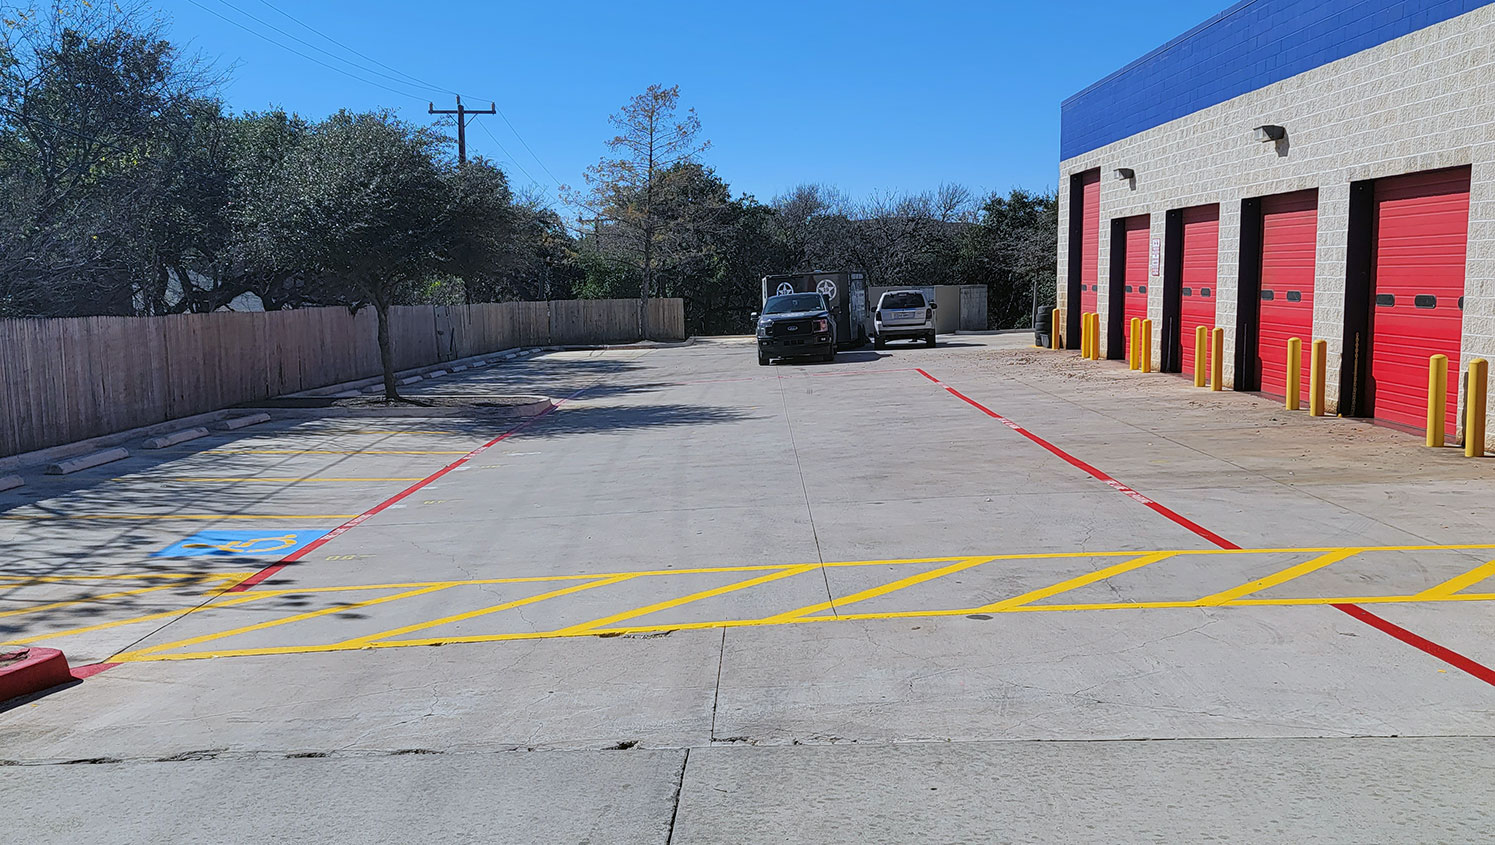 re-striped no parking zone